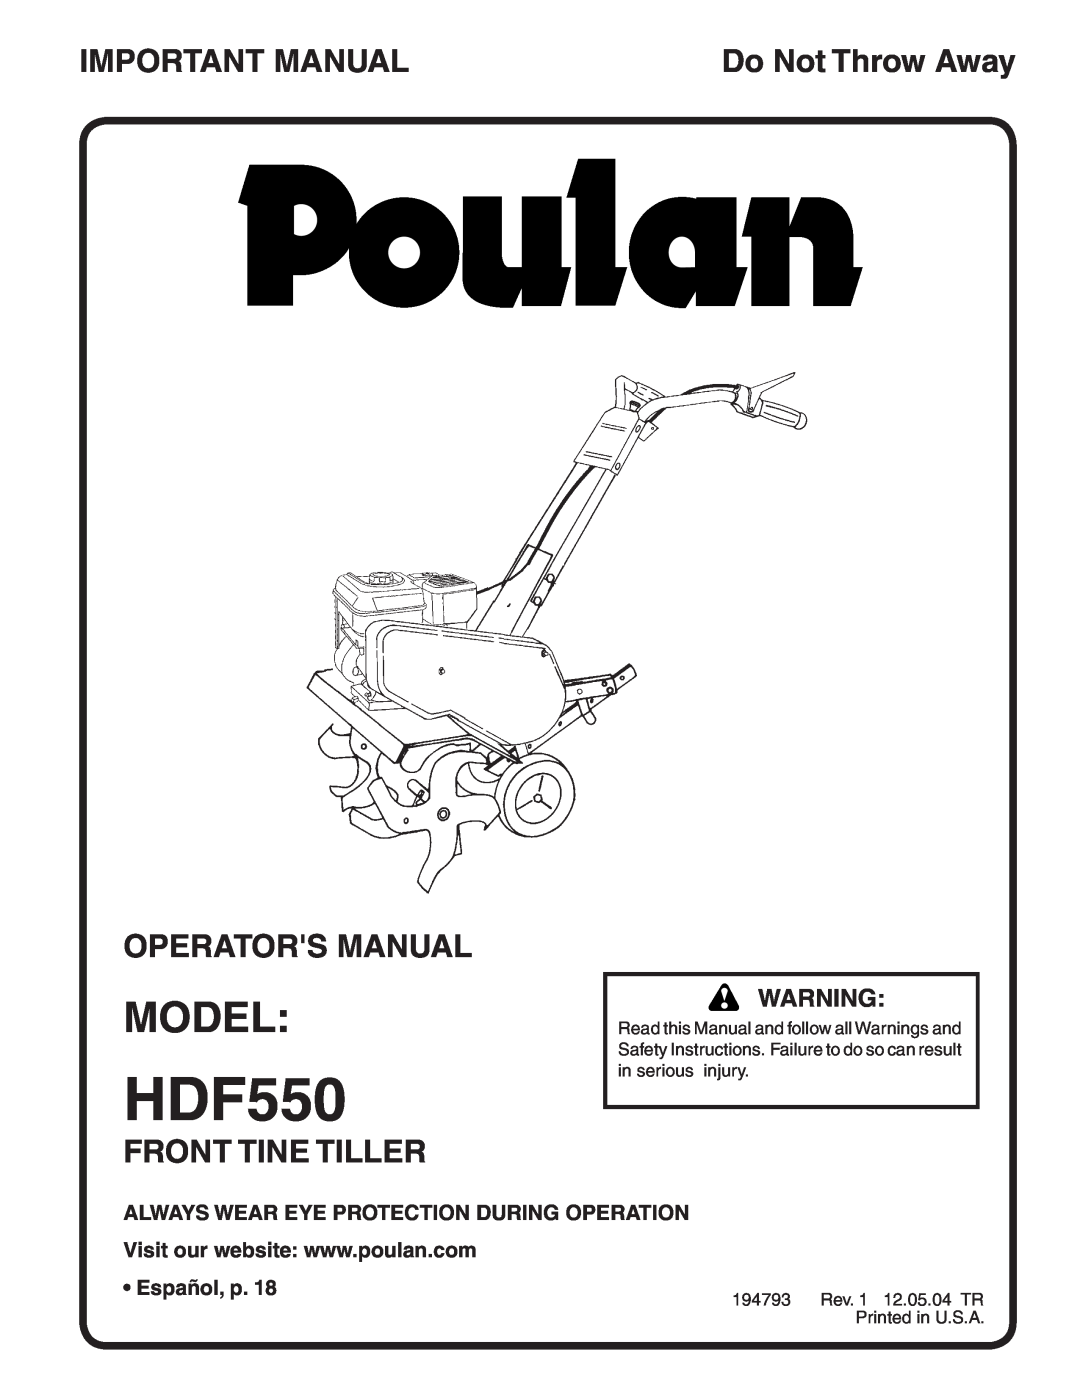 Poulan HDF550 manual Model, Important Manual, Operators Manual, Front Tine Tiller, Do Not Throw Away 